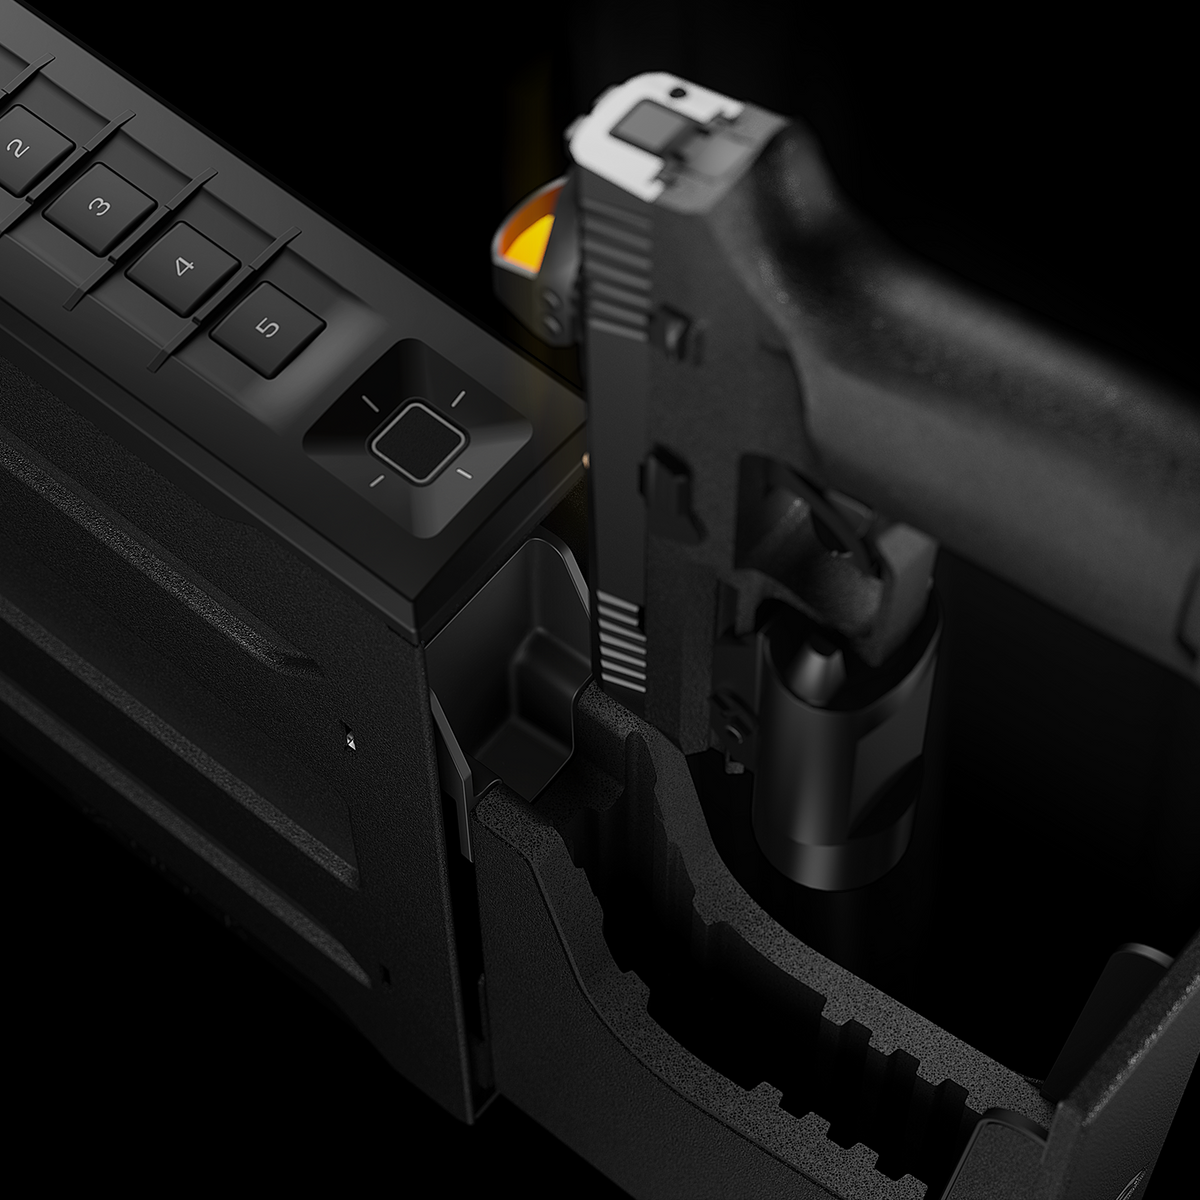 Vaultek SR20 Bluetooth 2.0 Slider Handgun Safe Pistol Going Inside